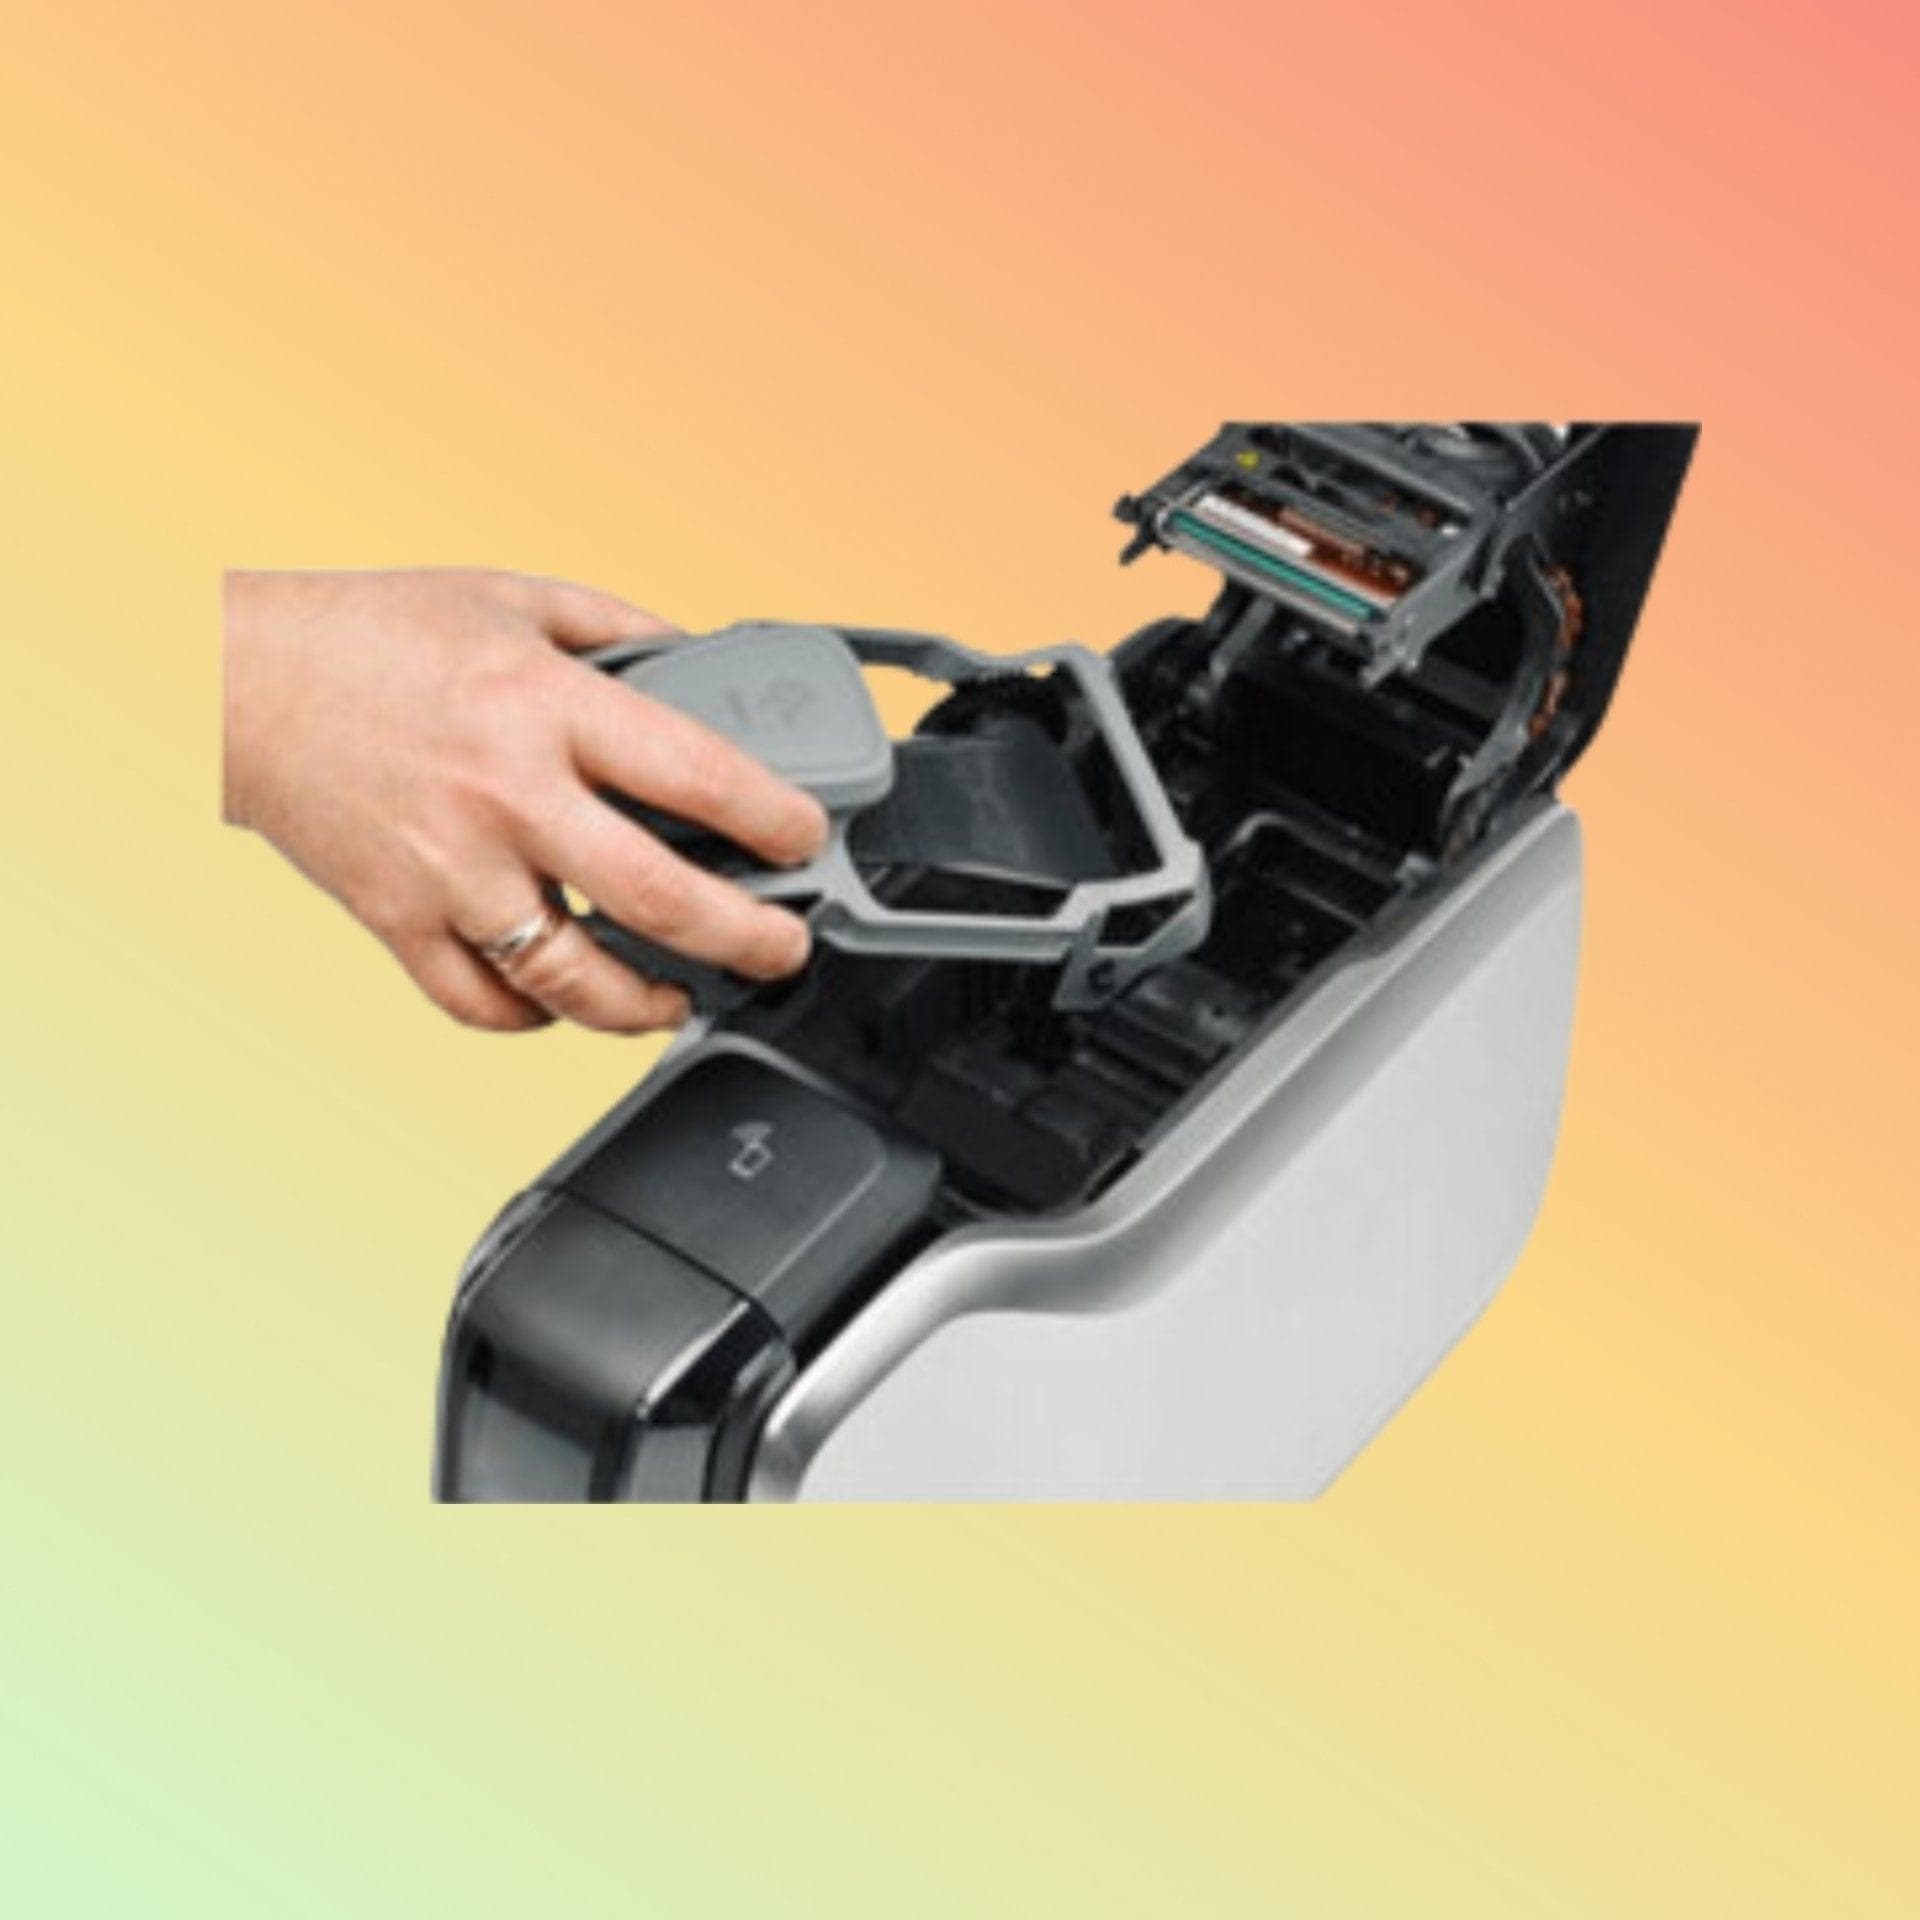 Idcard Printer - Zebra ZC100/ZC300 Series - Neotech